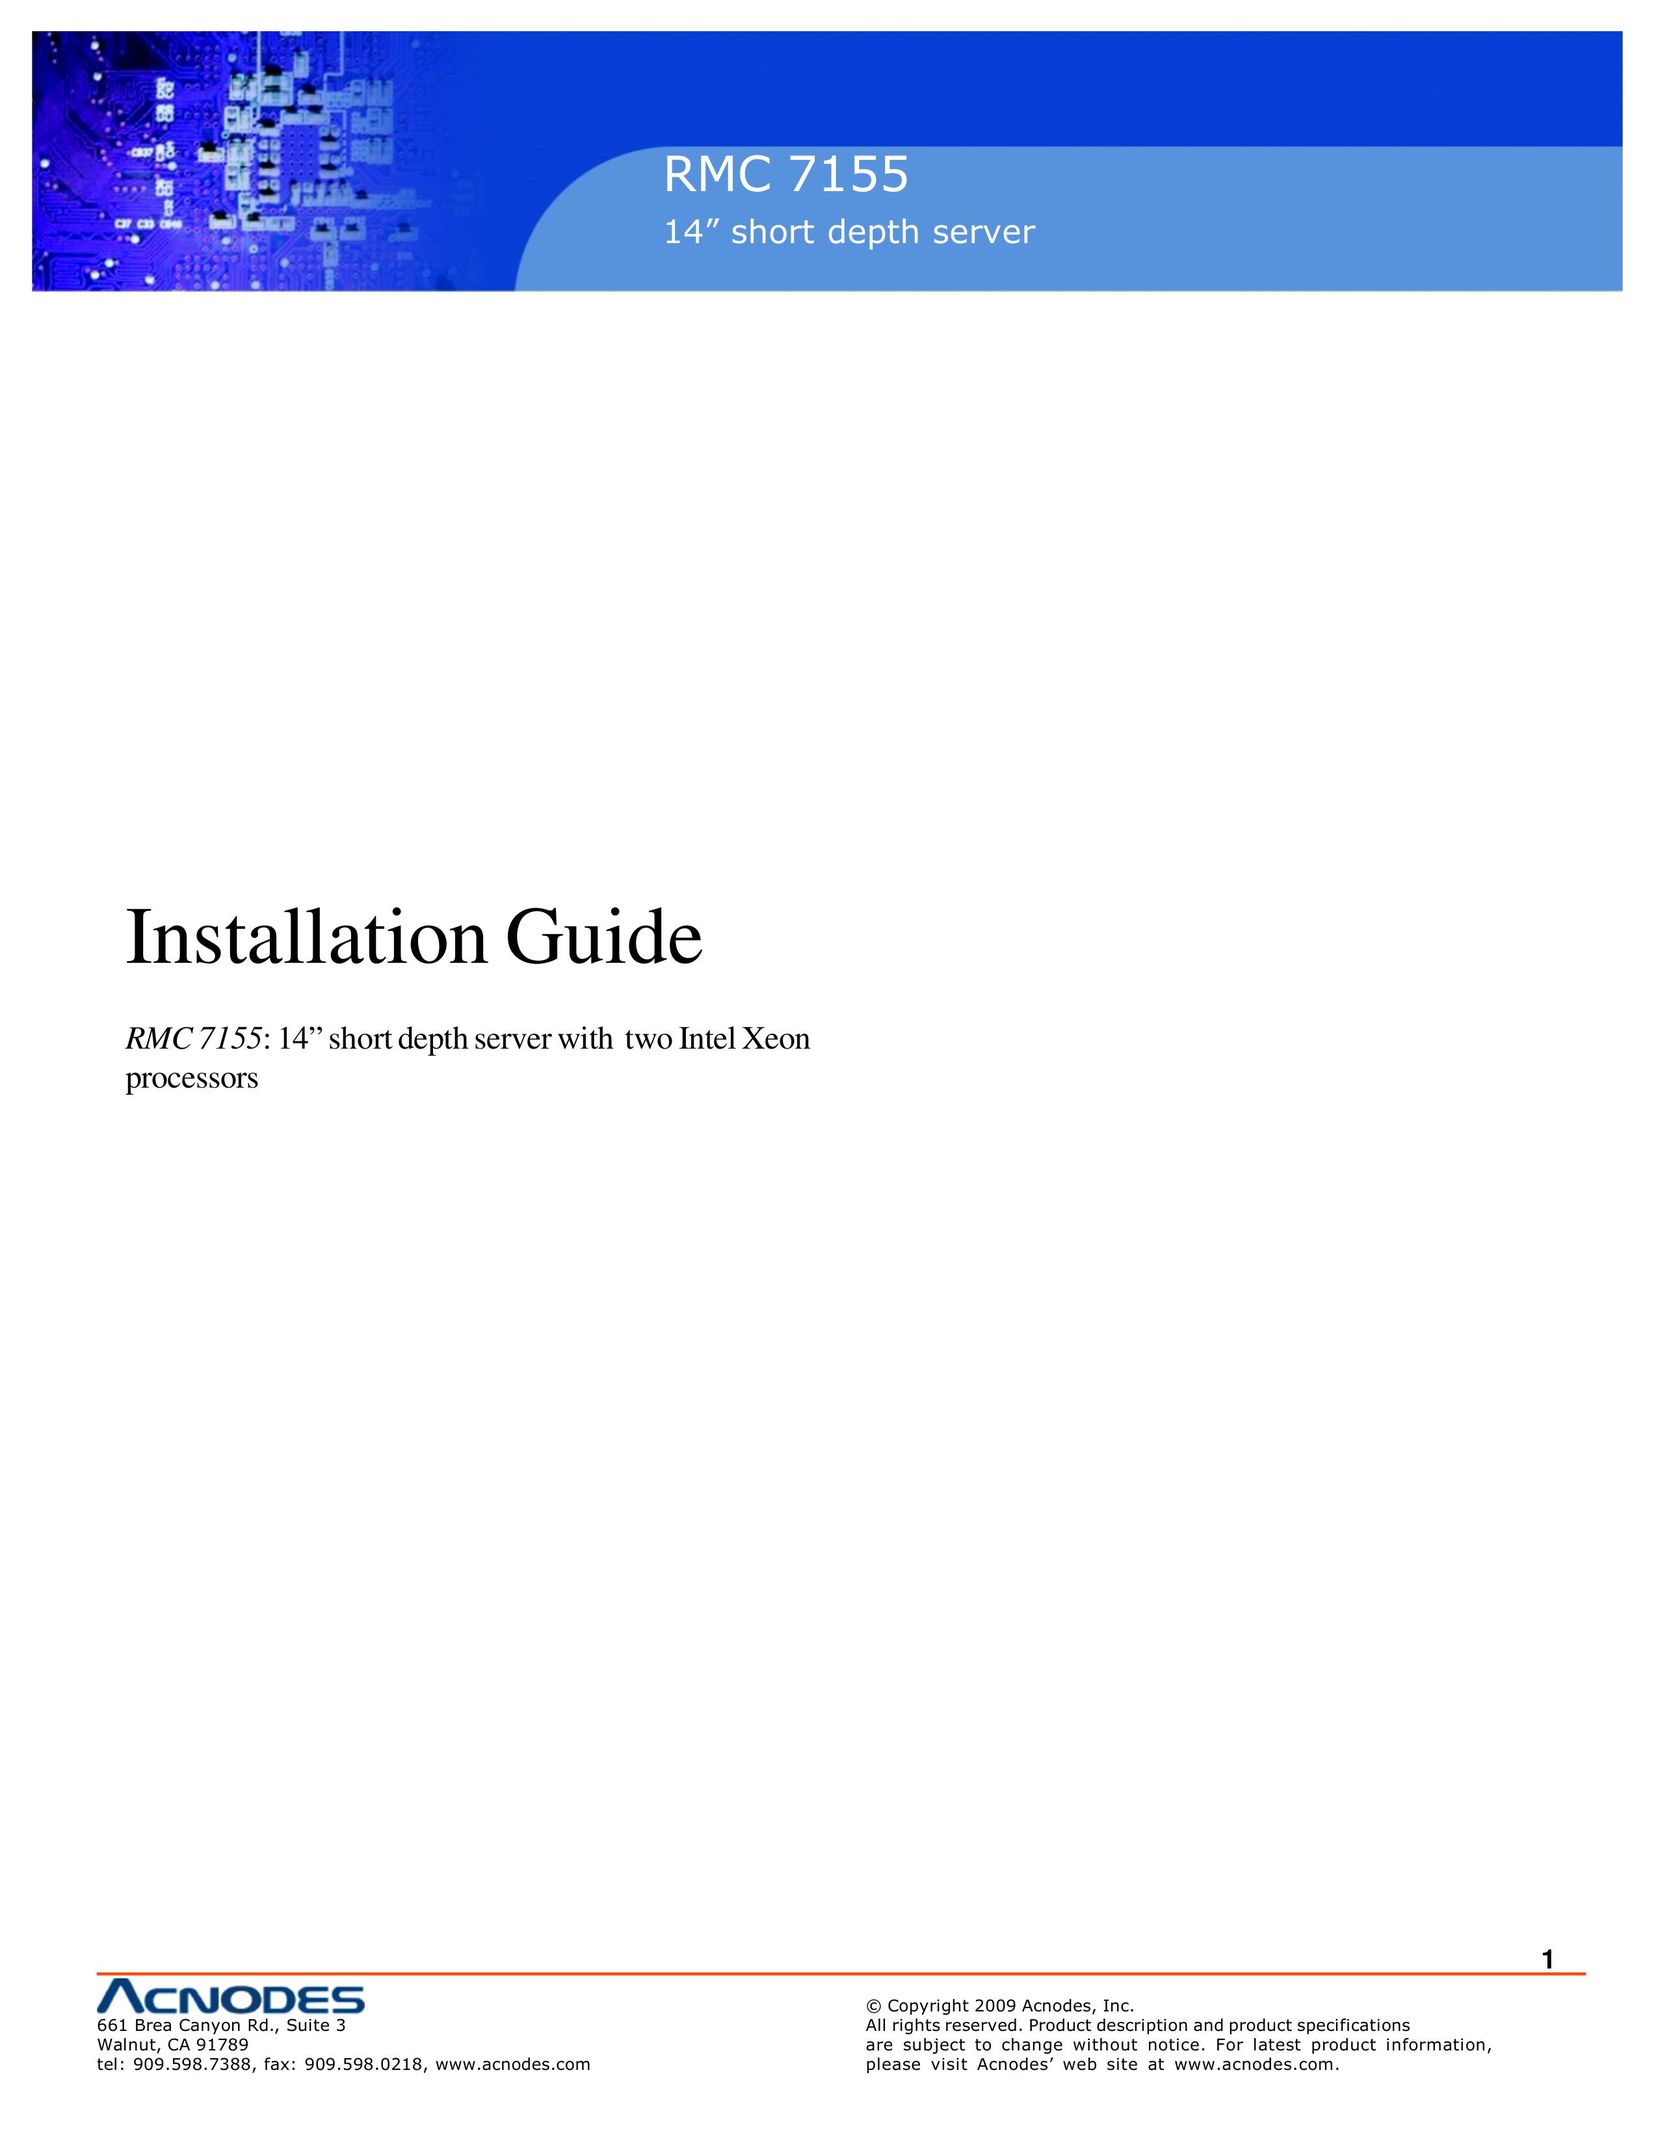 Acnodes RMC 7155 Server User Manual